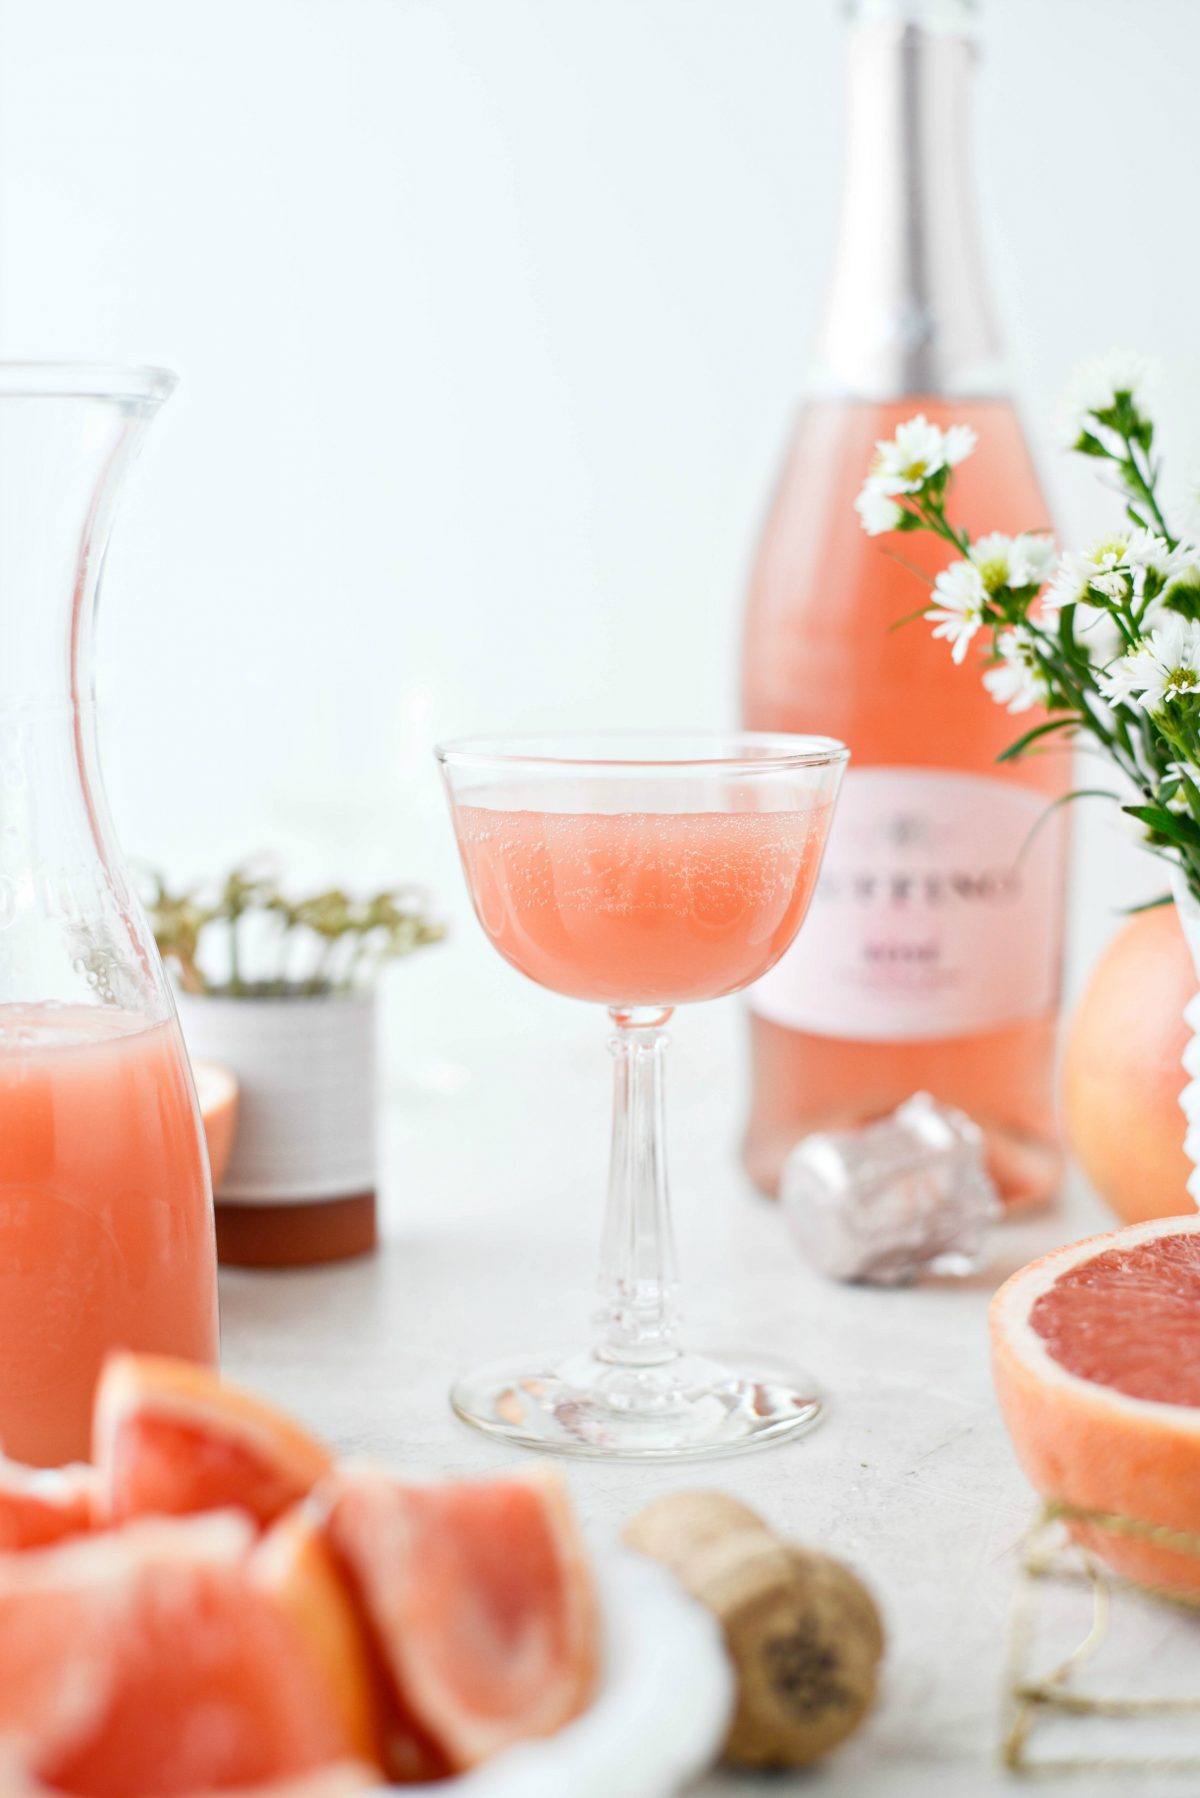  Grapefruit Rosé Mimosen l SimplyScratch.com #adult #beverage #grapefruit #rose #mimosa #easter #brunch #mothersday